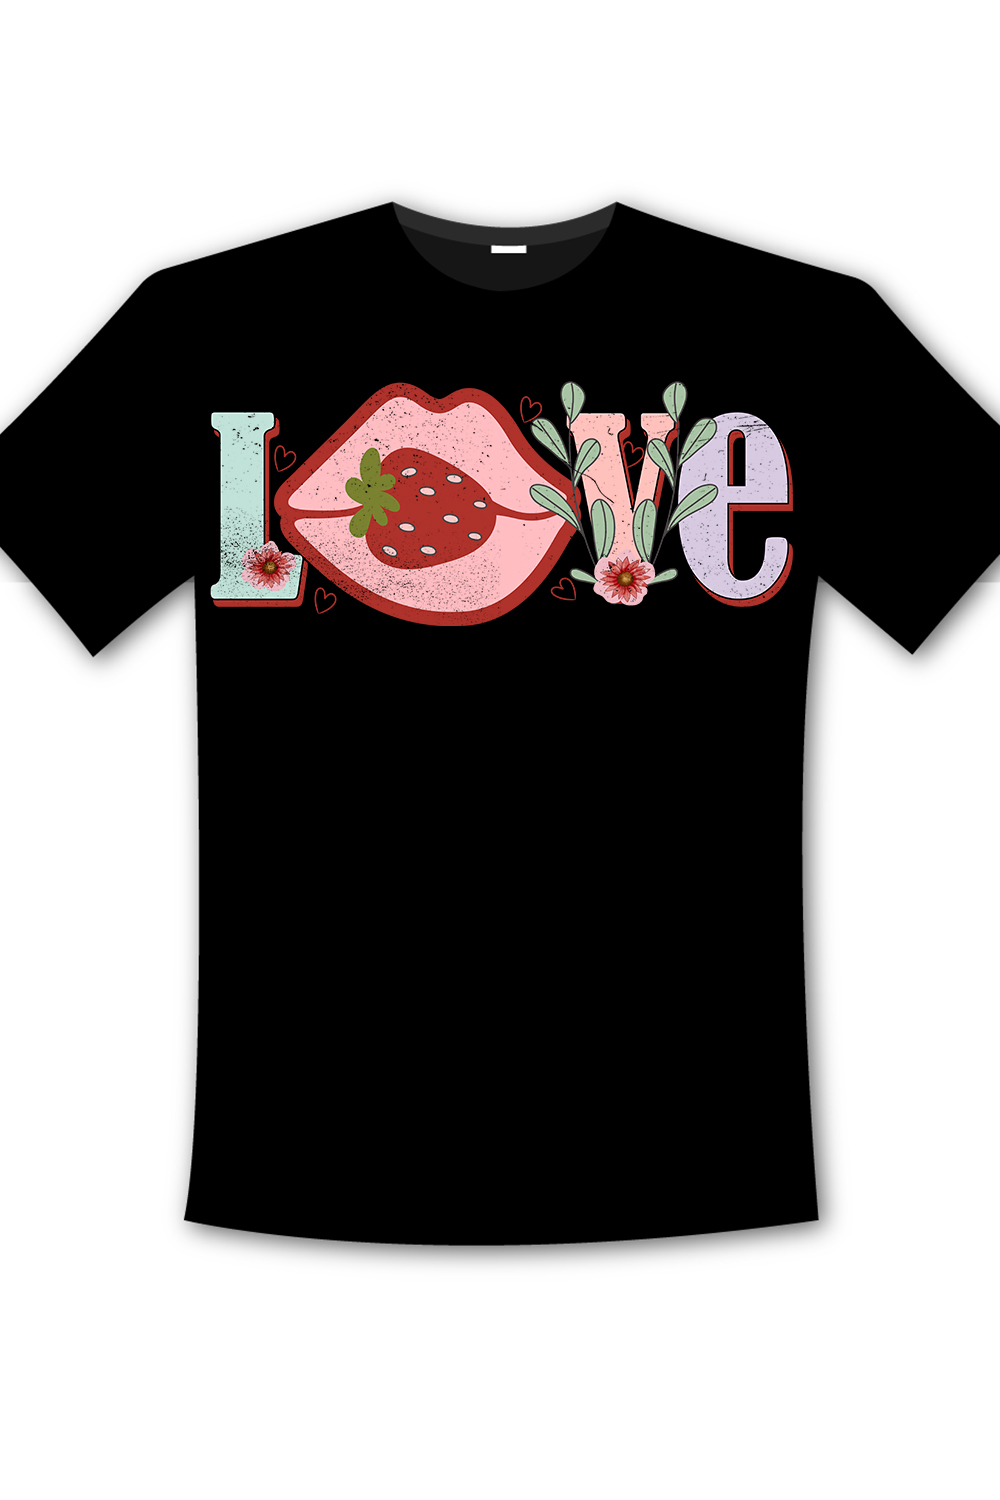 Retro Valentine’s Day T-Shirt Design pinterest image.